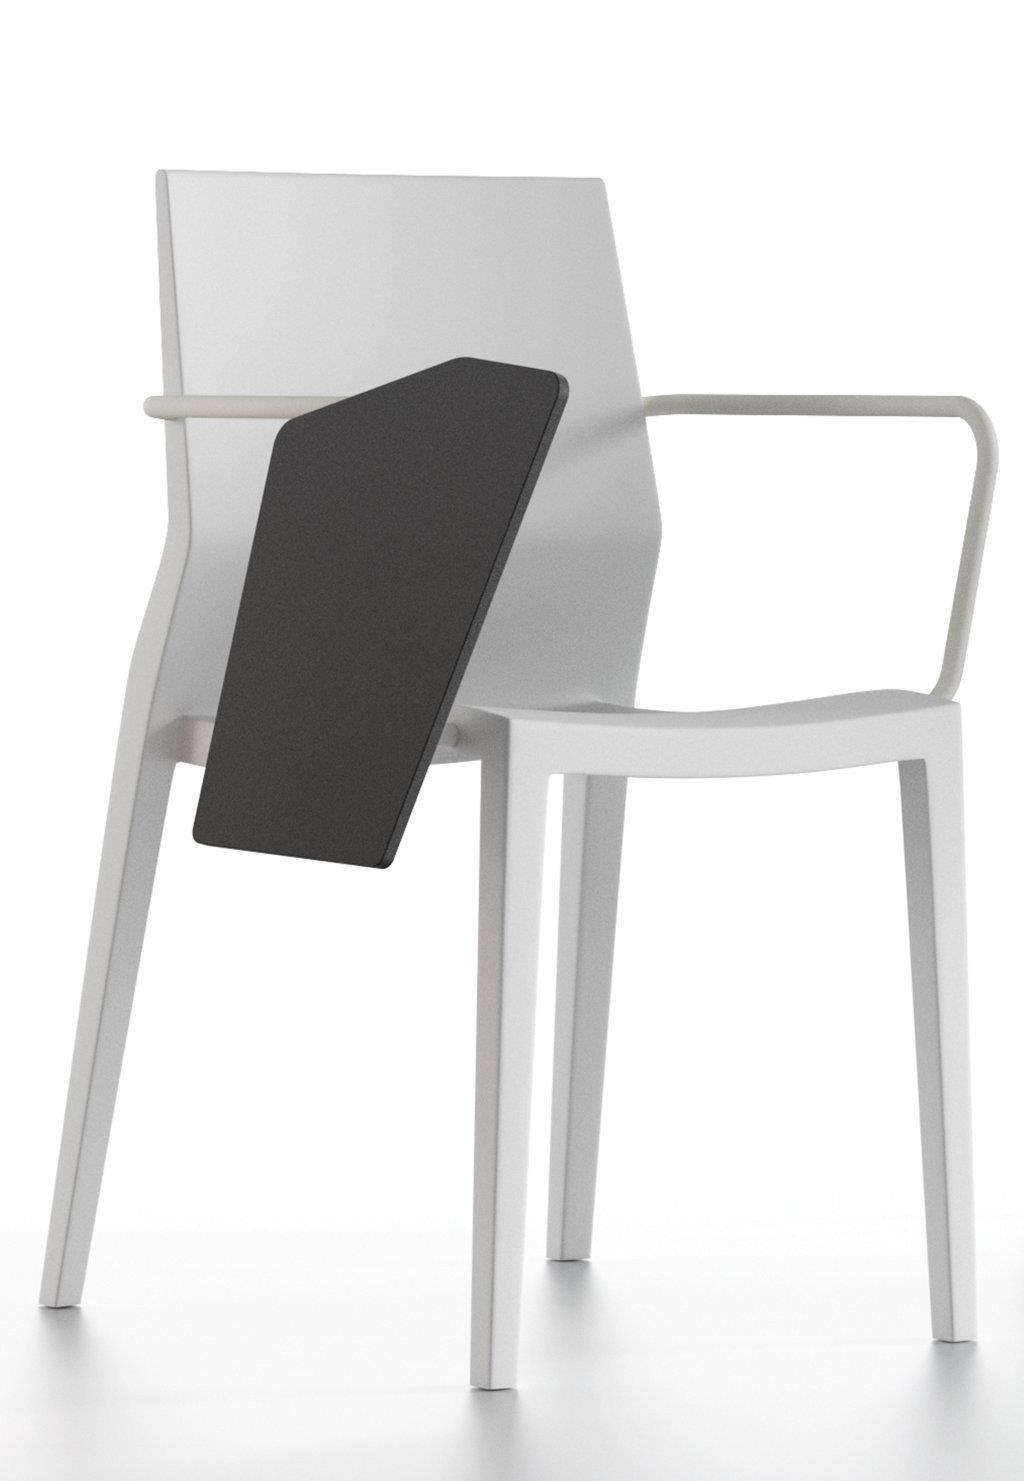 Hoth Chair by IBEBI Design